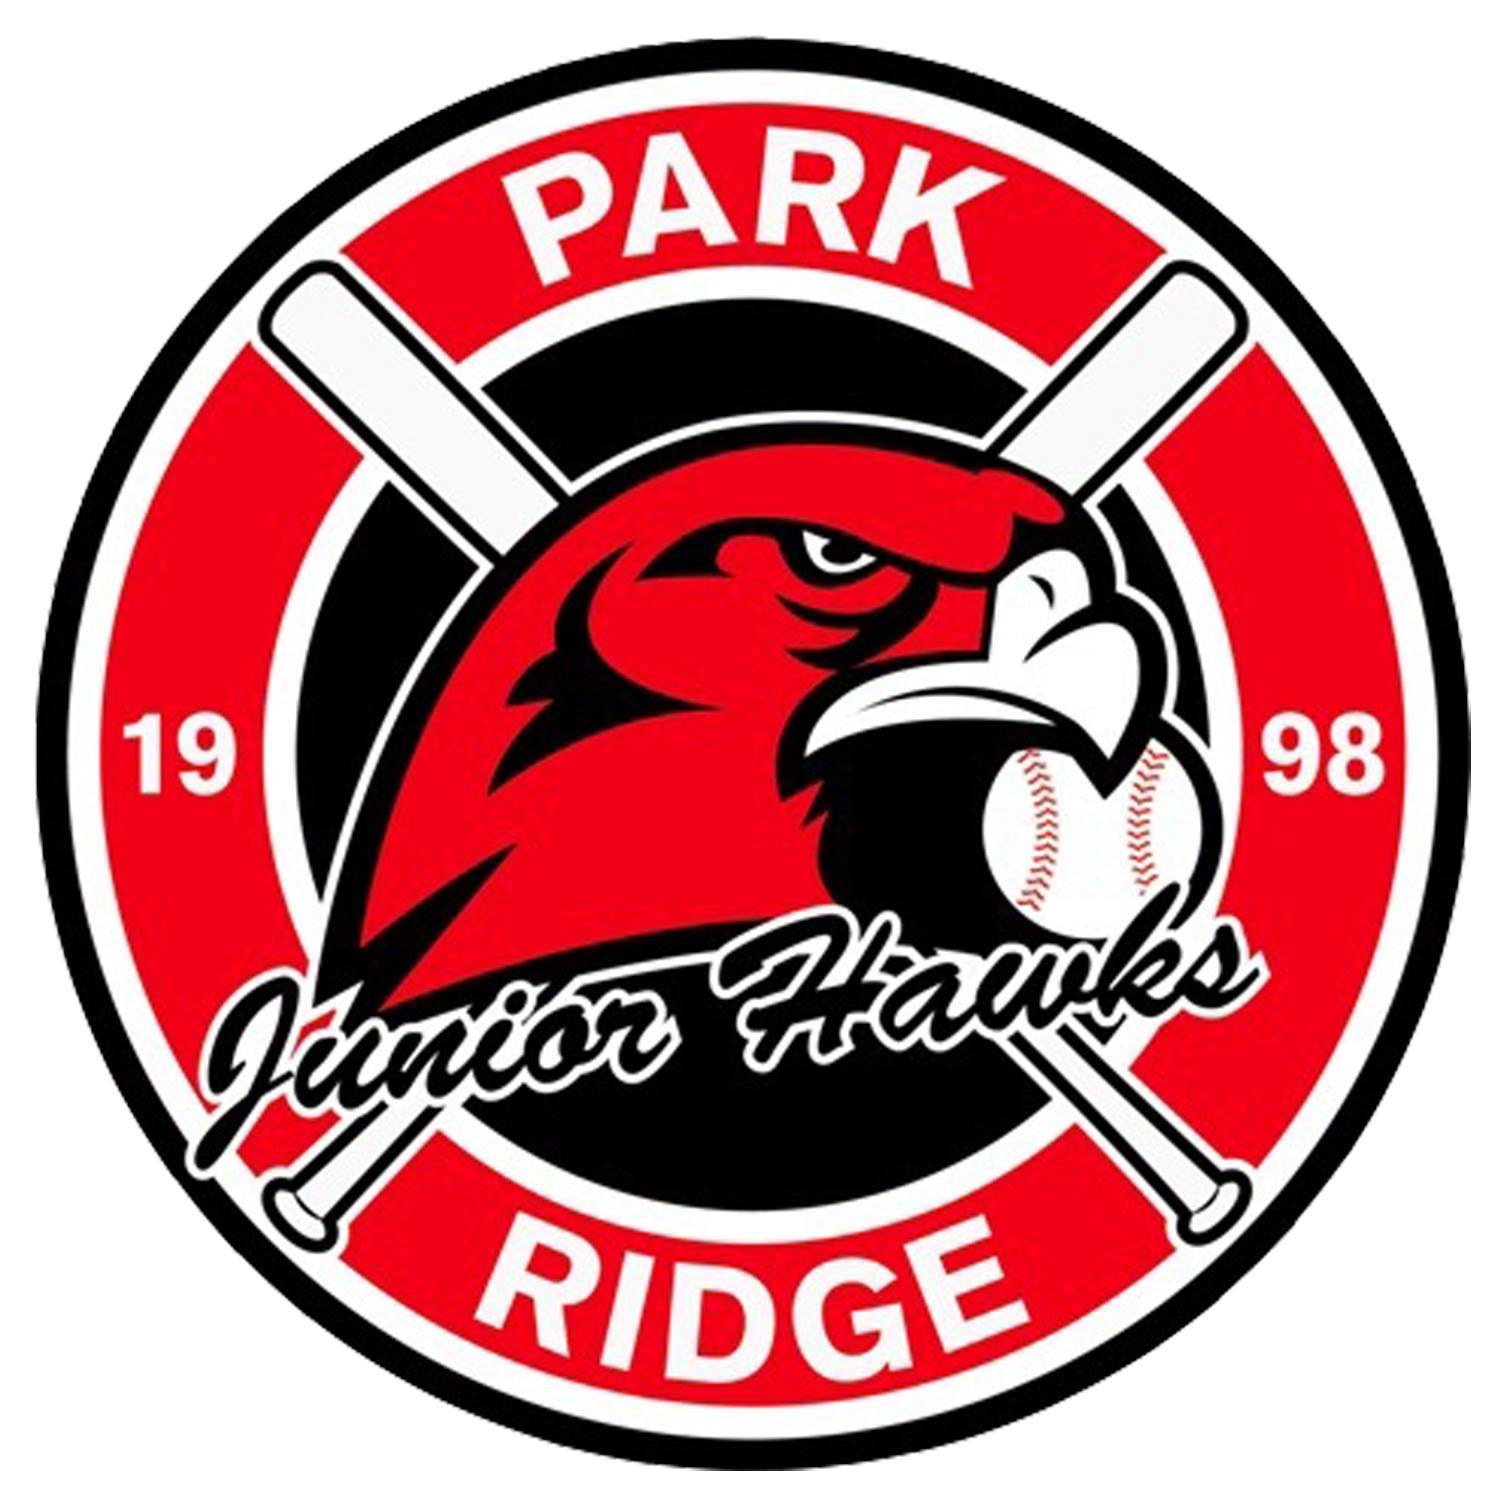 Park Ridge Jr Hawk baseball-Park Ridge Illinois-travel baseball-Baseballconnected